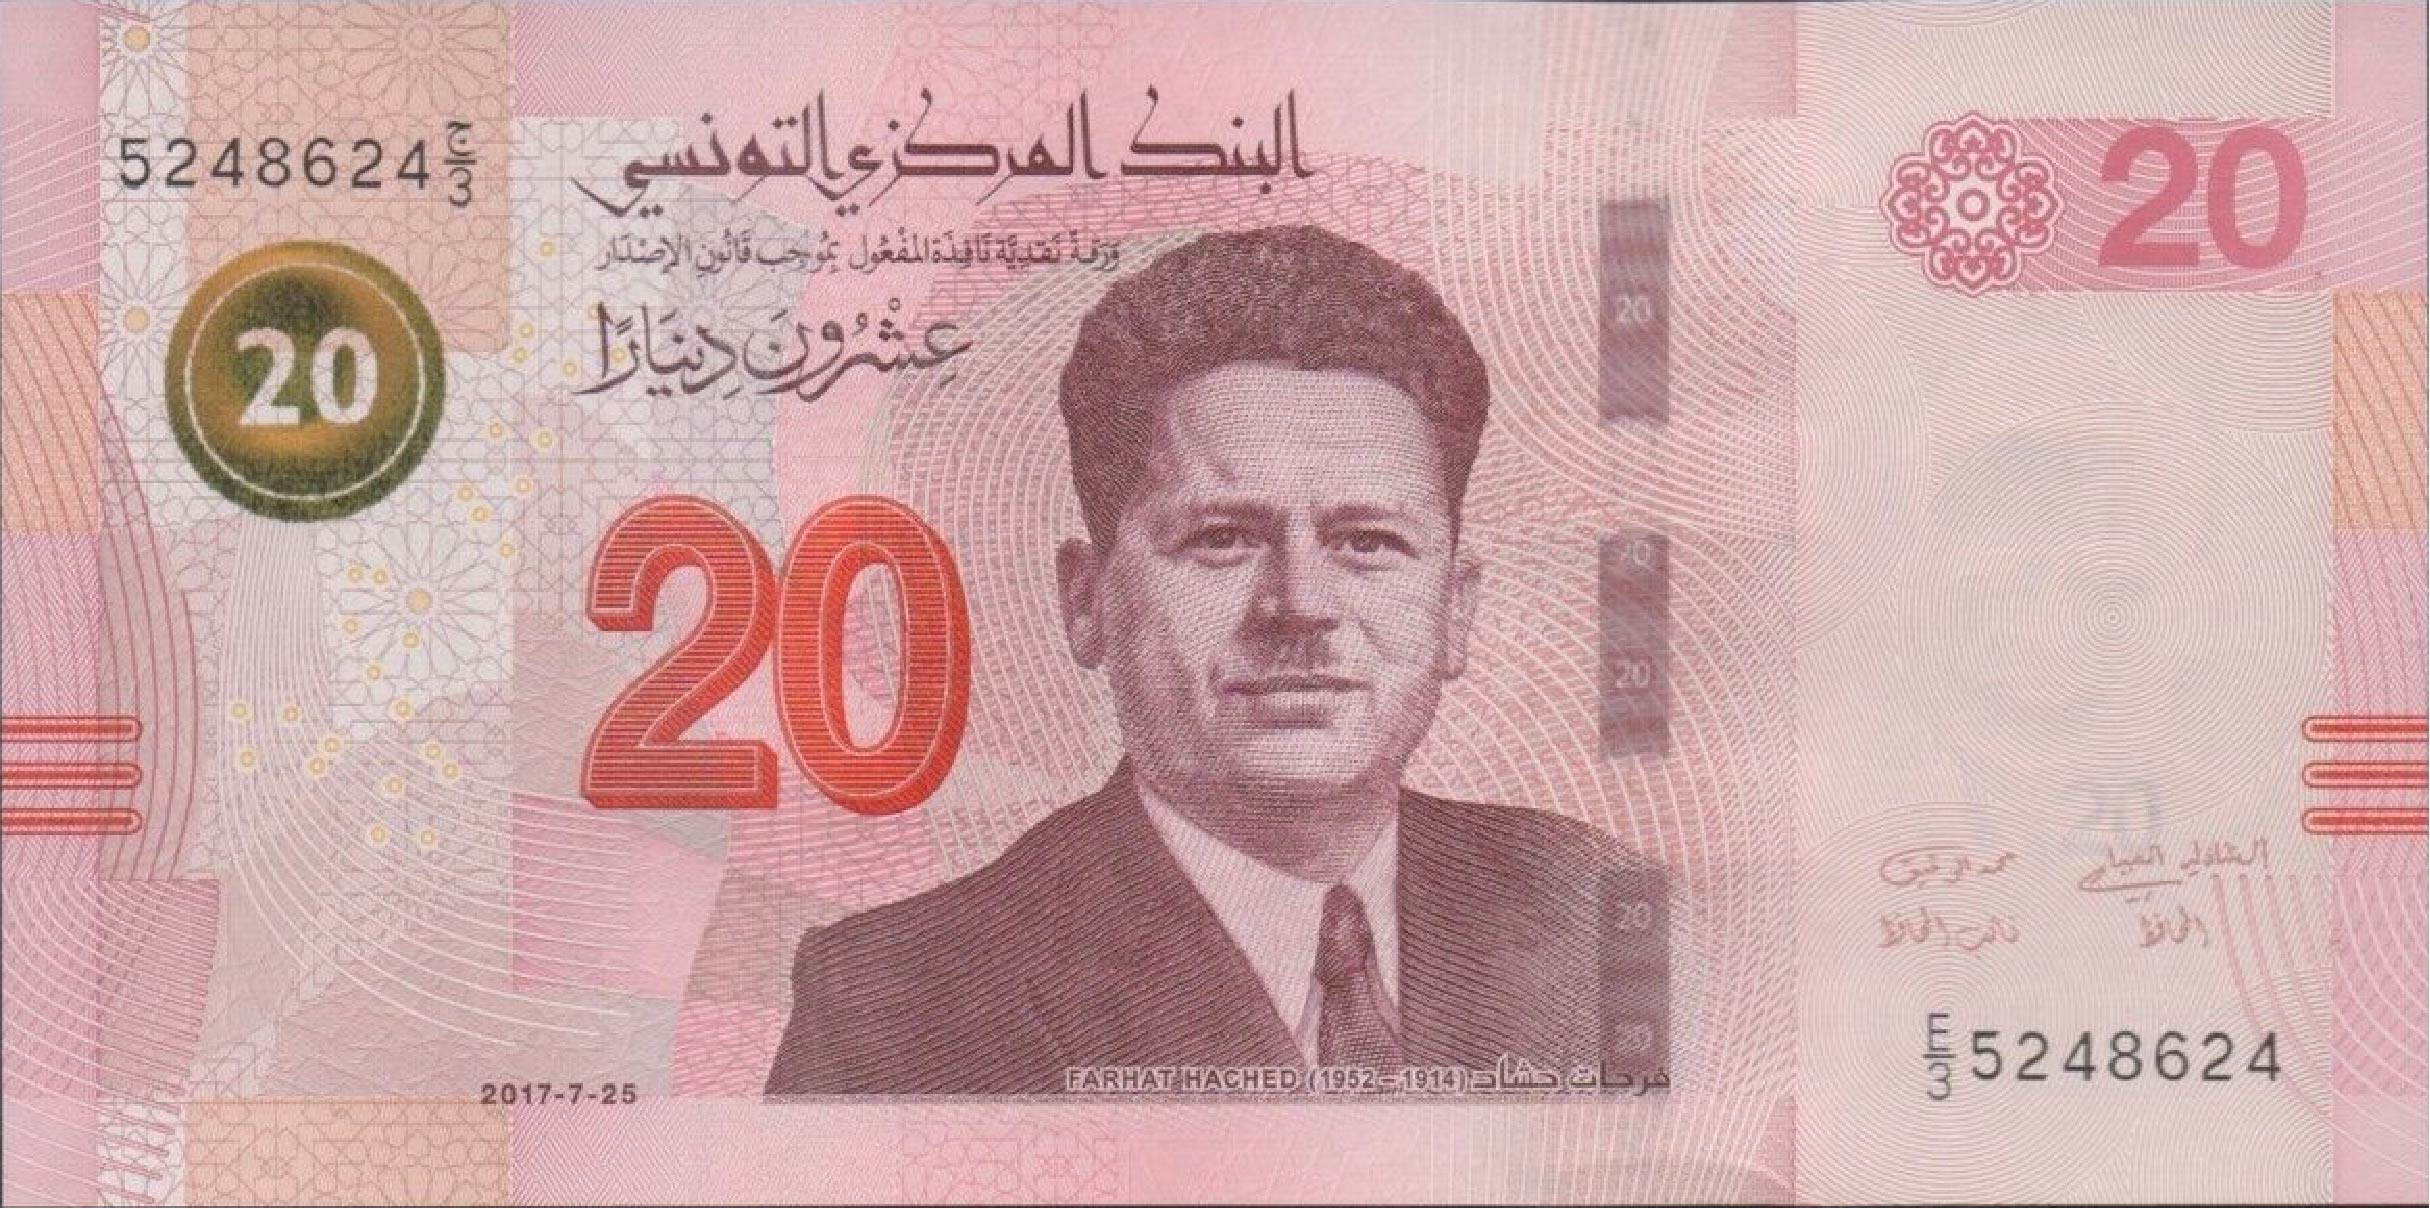 20 Tunisian Dinars banknote (Farhat Hached)